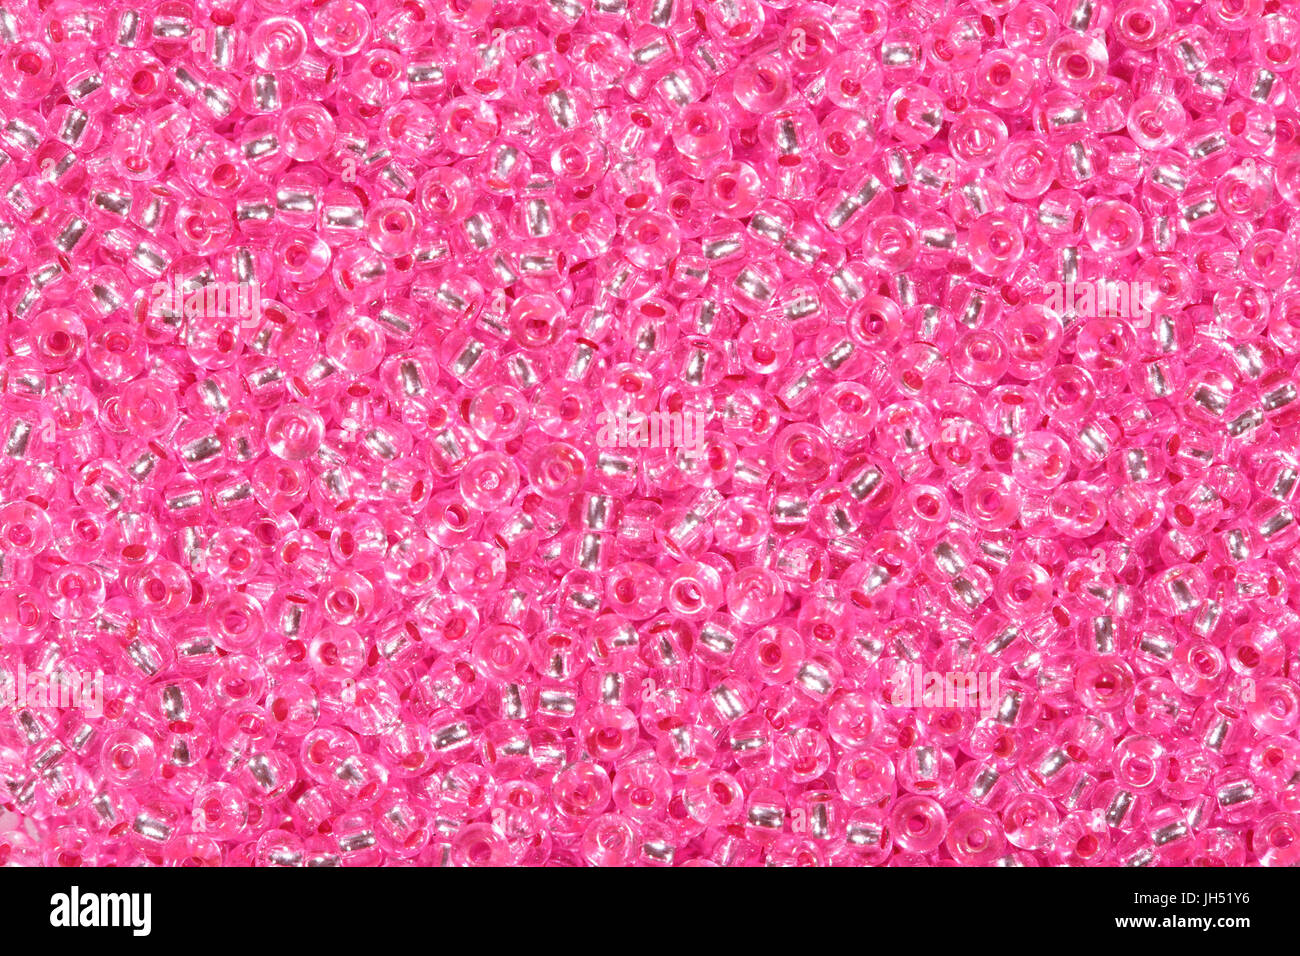 Many pink glass beads. Stock Photo